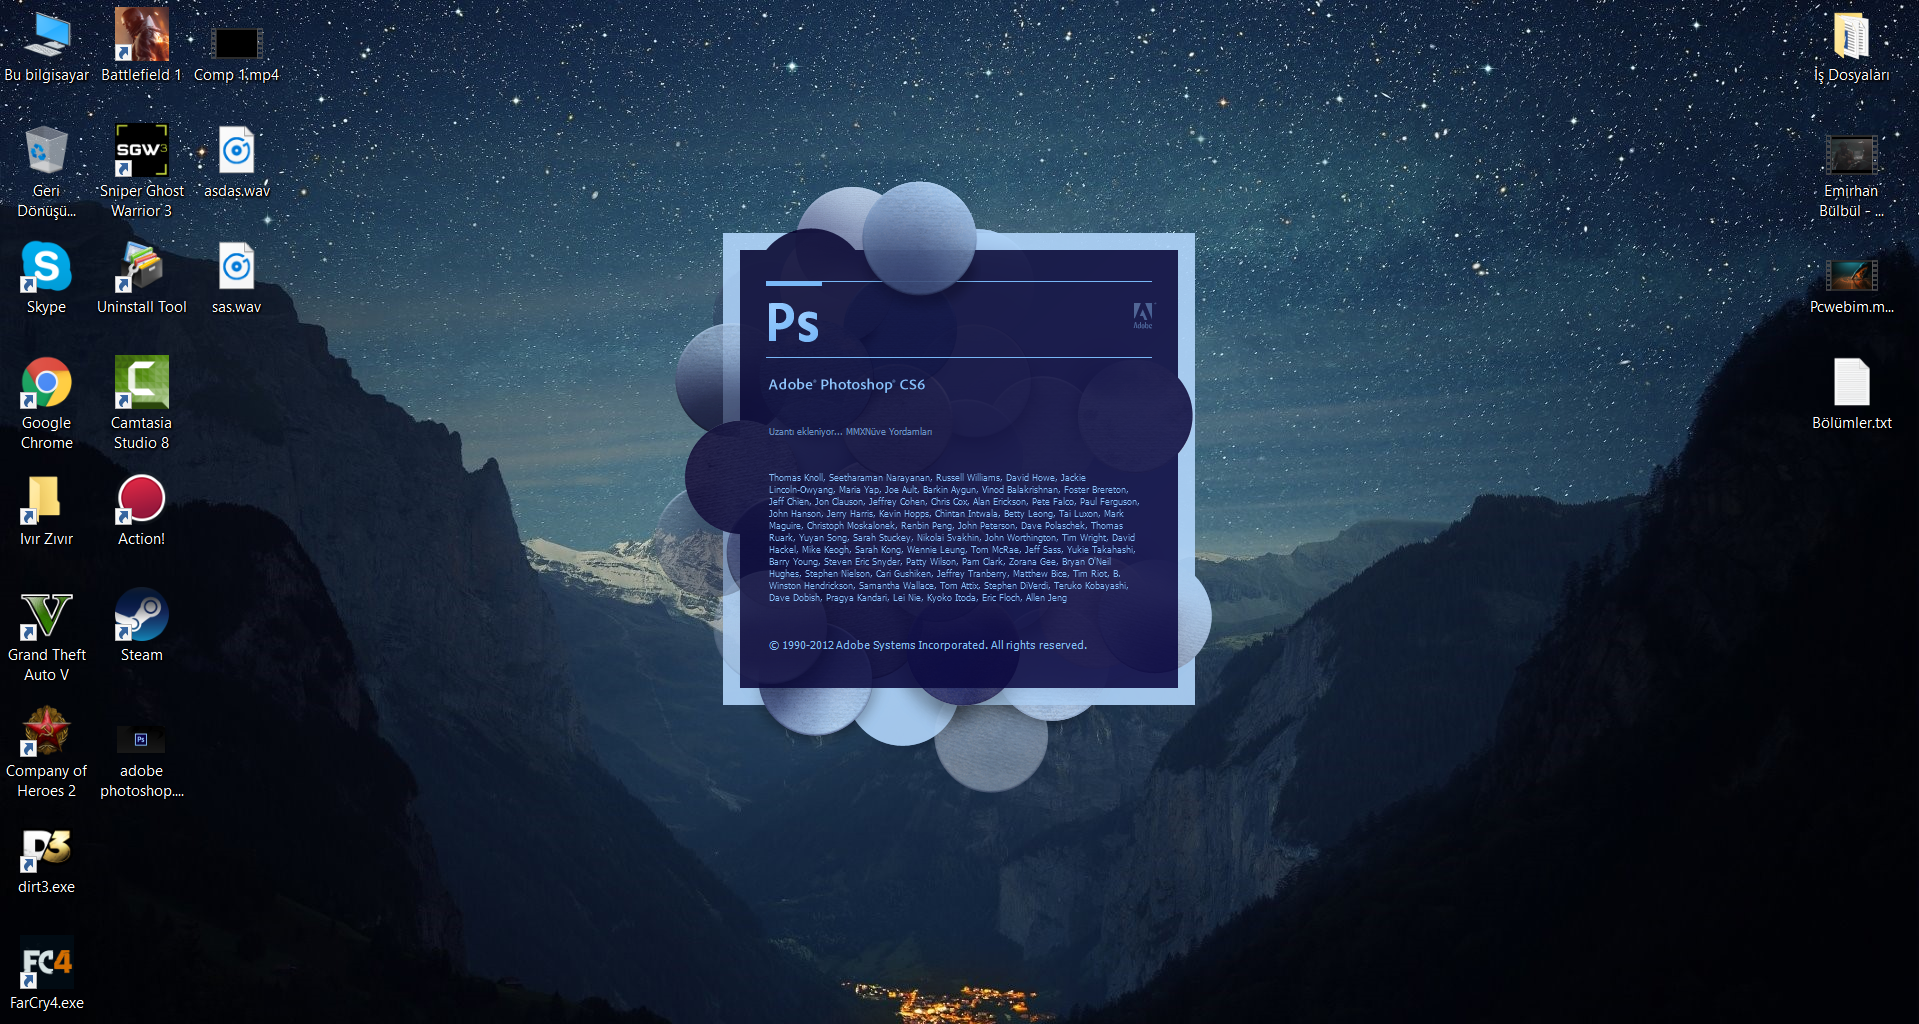 Adobe photoshop cs6 full torrent download